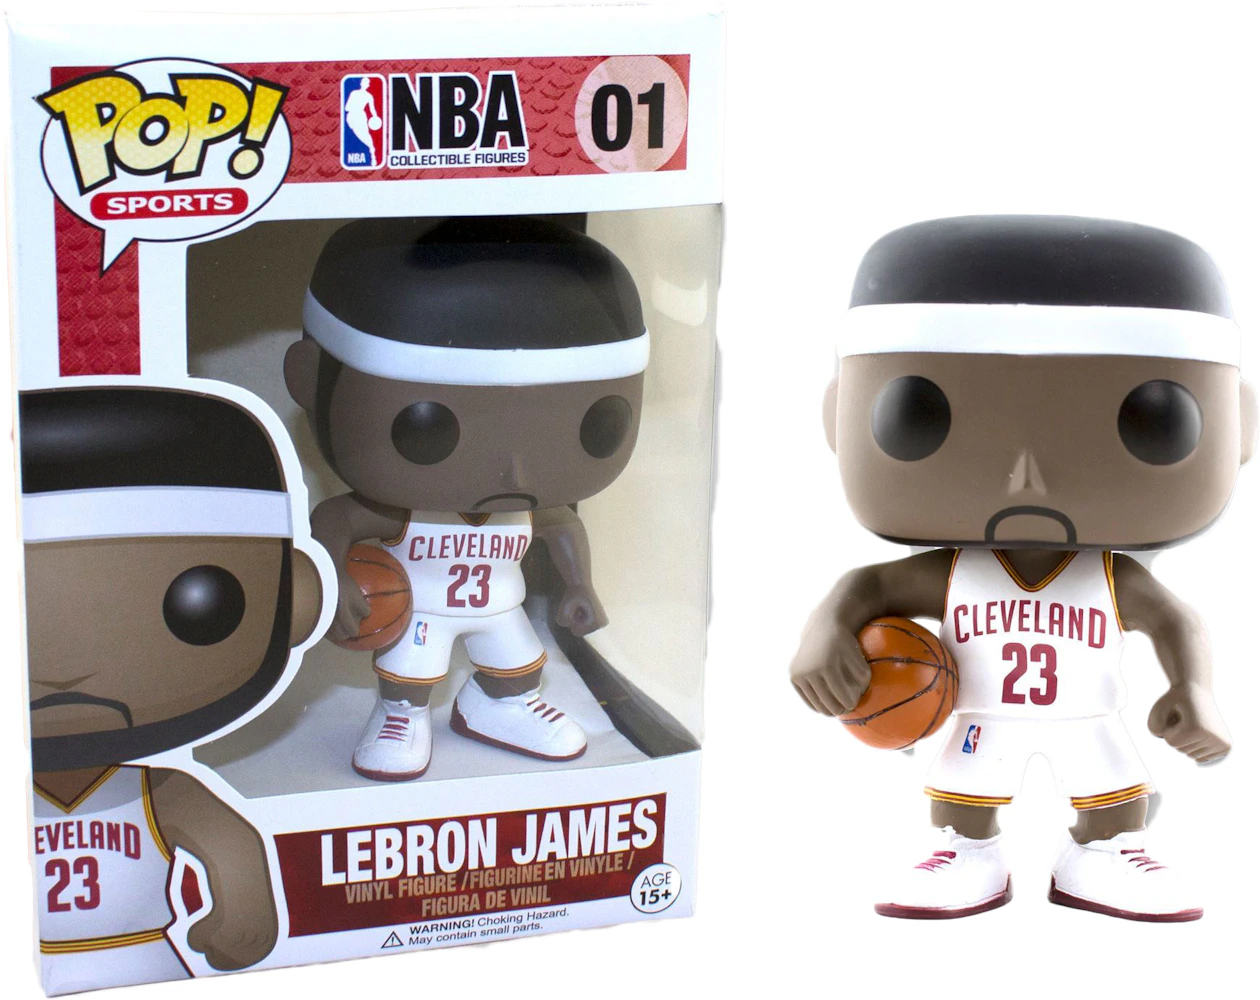 Funko Pop! Basketball NBA MPLS Lakers LeBron James Upper Deck Exclusive  Figure #164